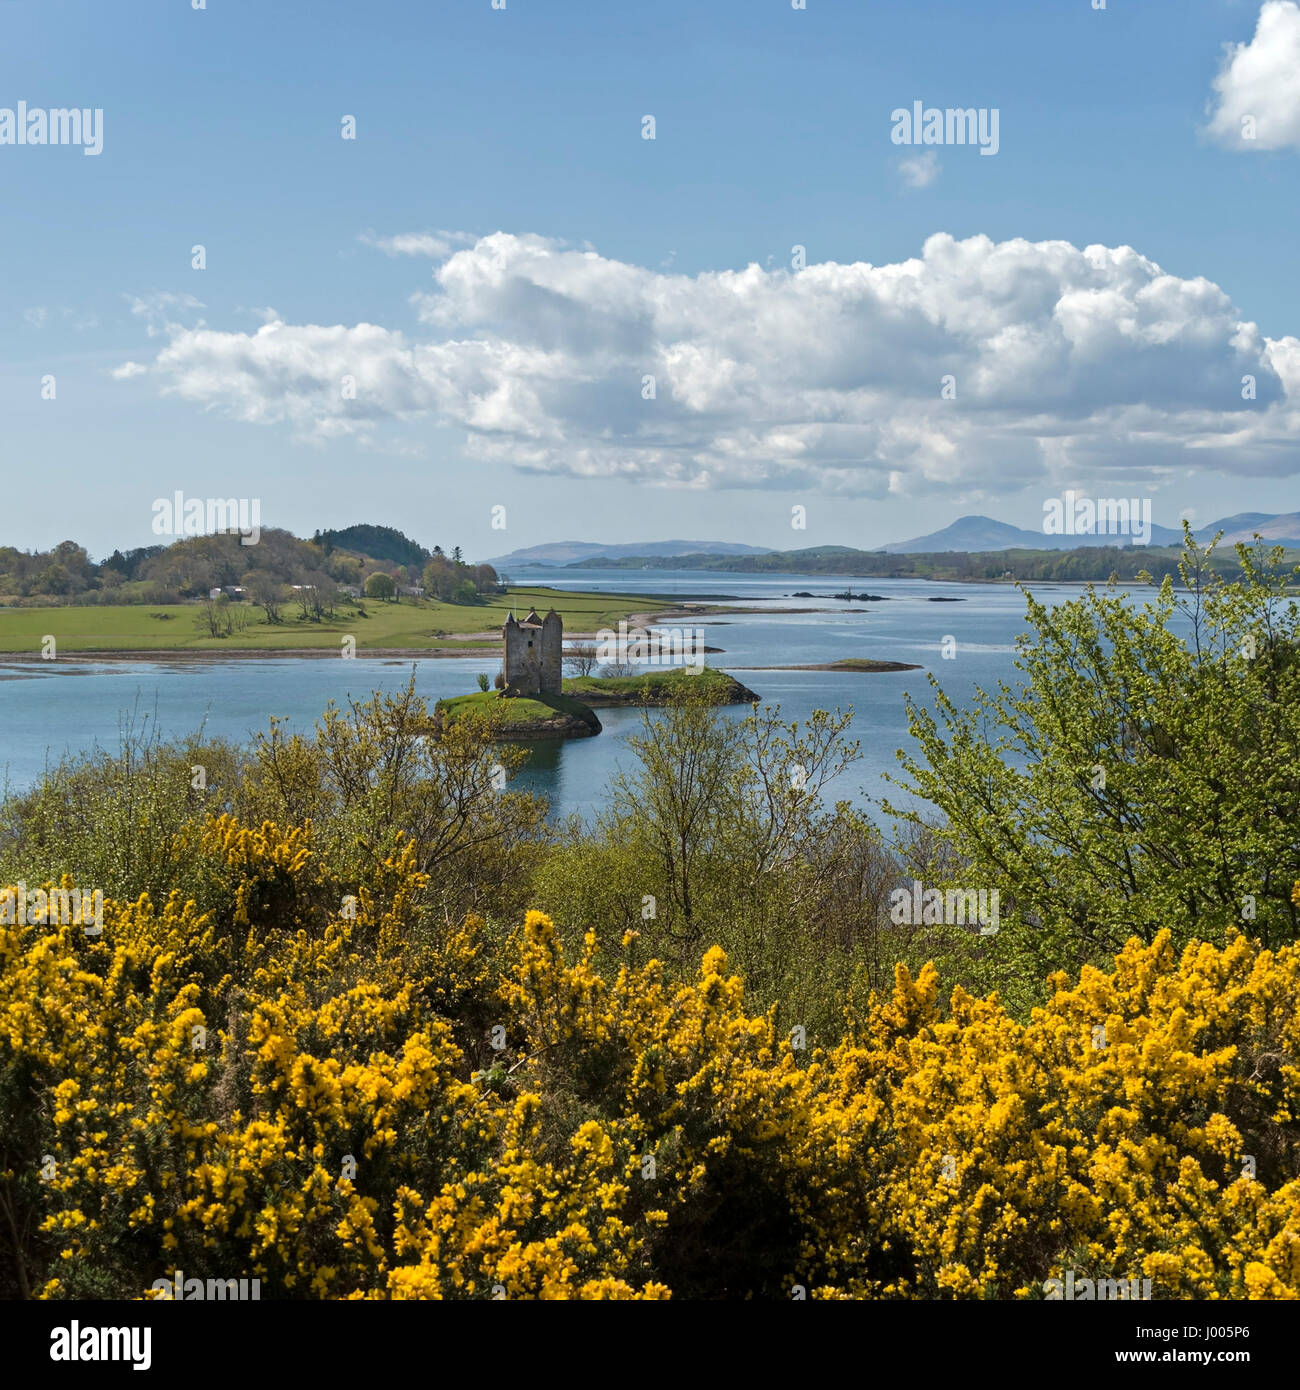 Castle Stalker on the Scottish West Coast Coast on the shores of Loch Linnhe, Appin, Argyll, Scotland, UK. Stock Photo